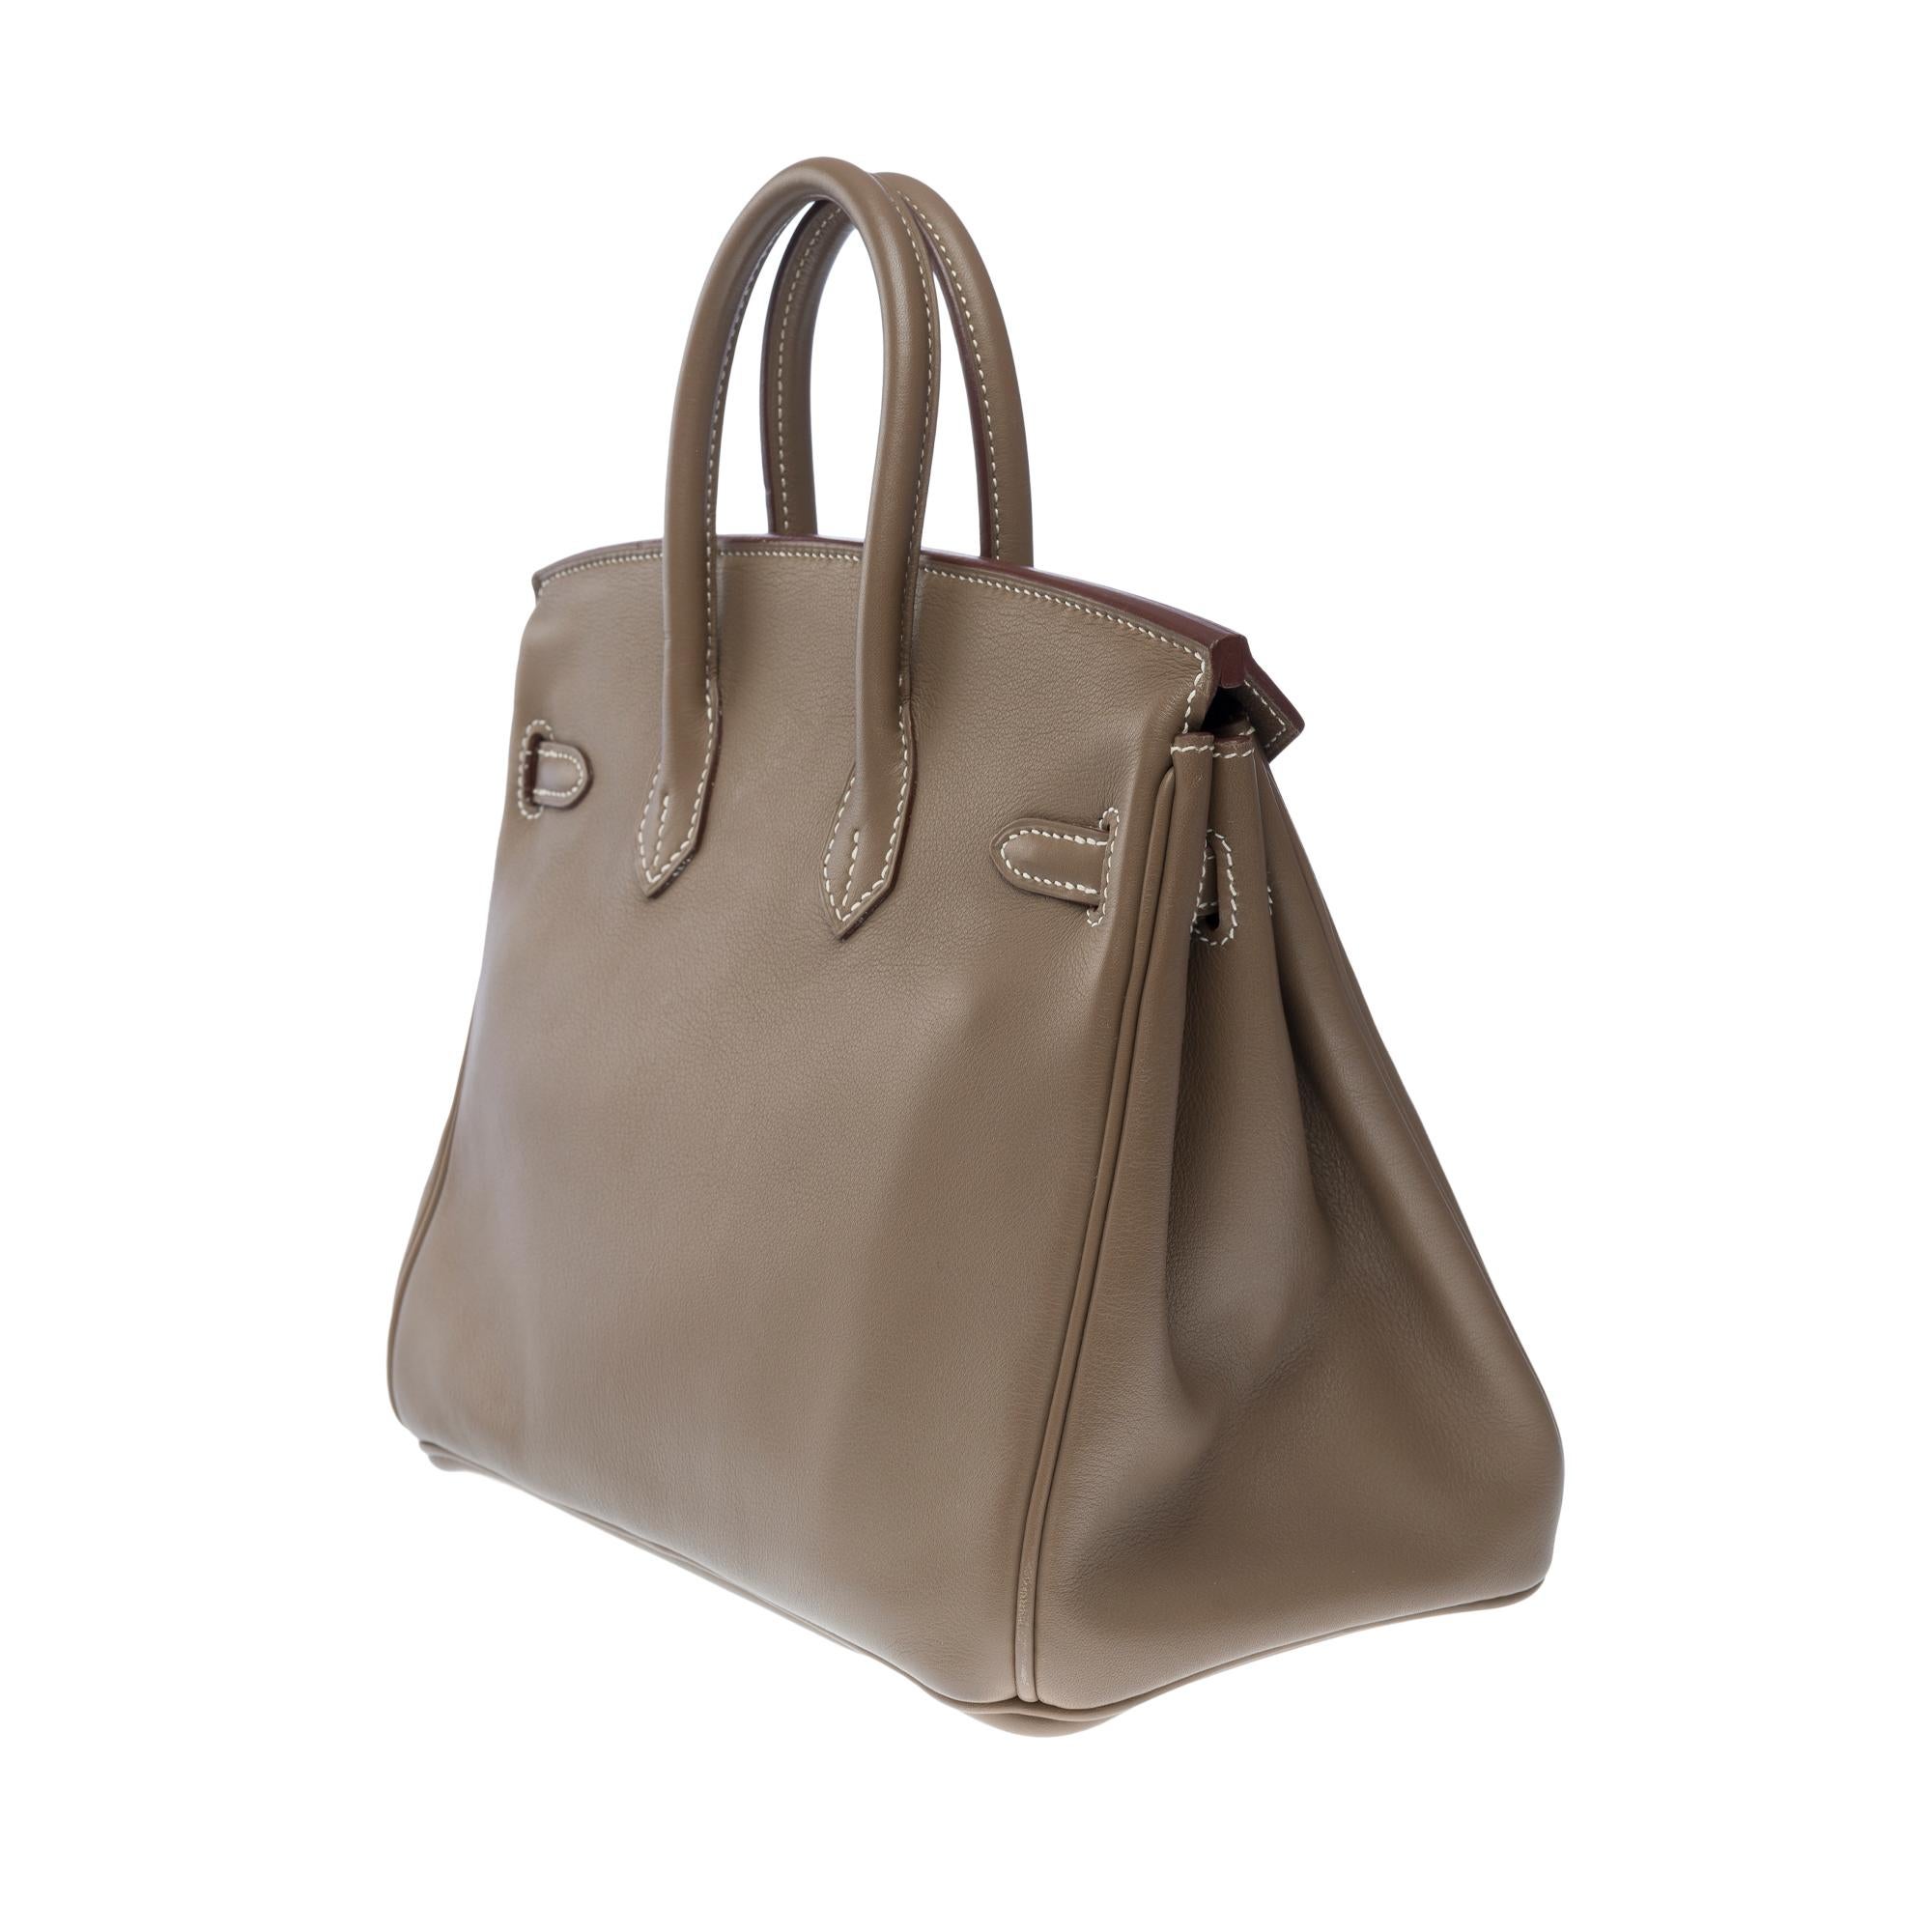 Amazing Hermes Birkin 25cm handbag in Etoupe Swift Calf leather, SHW 2